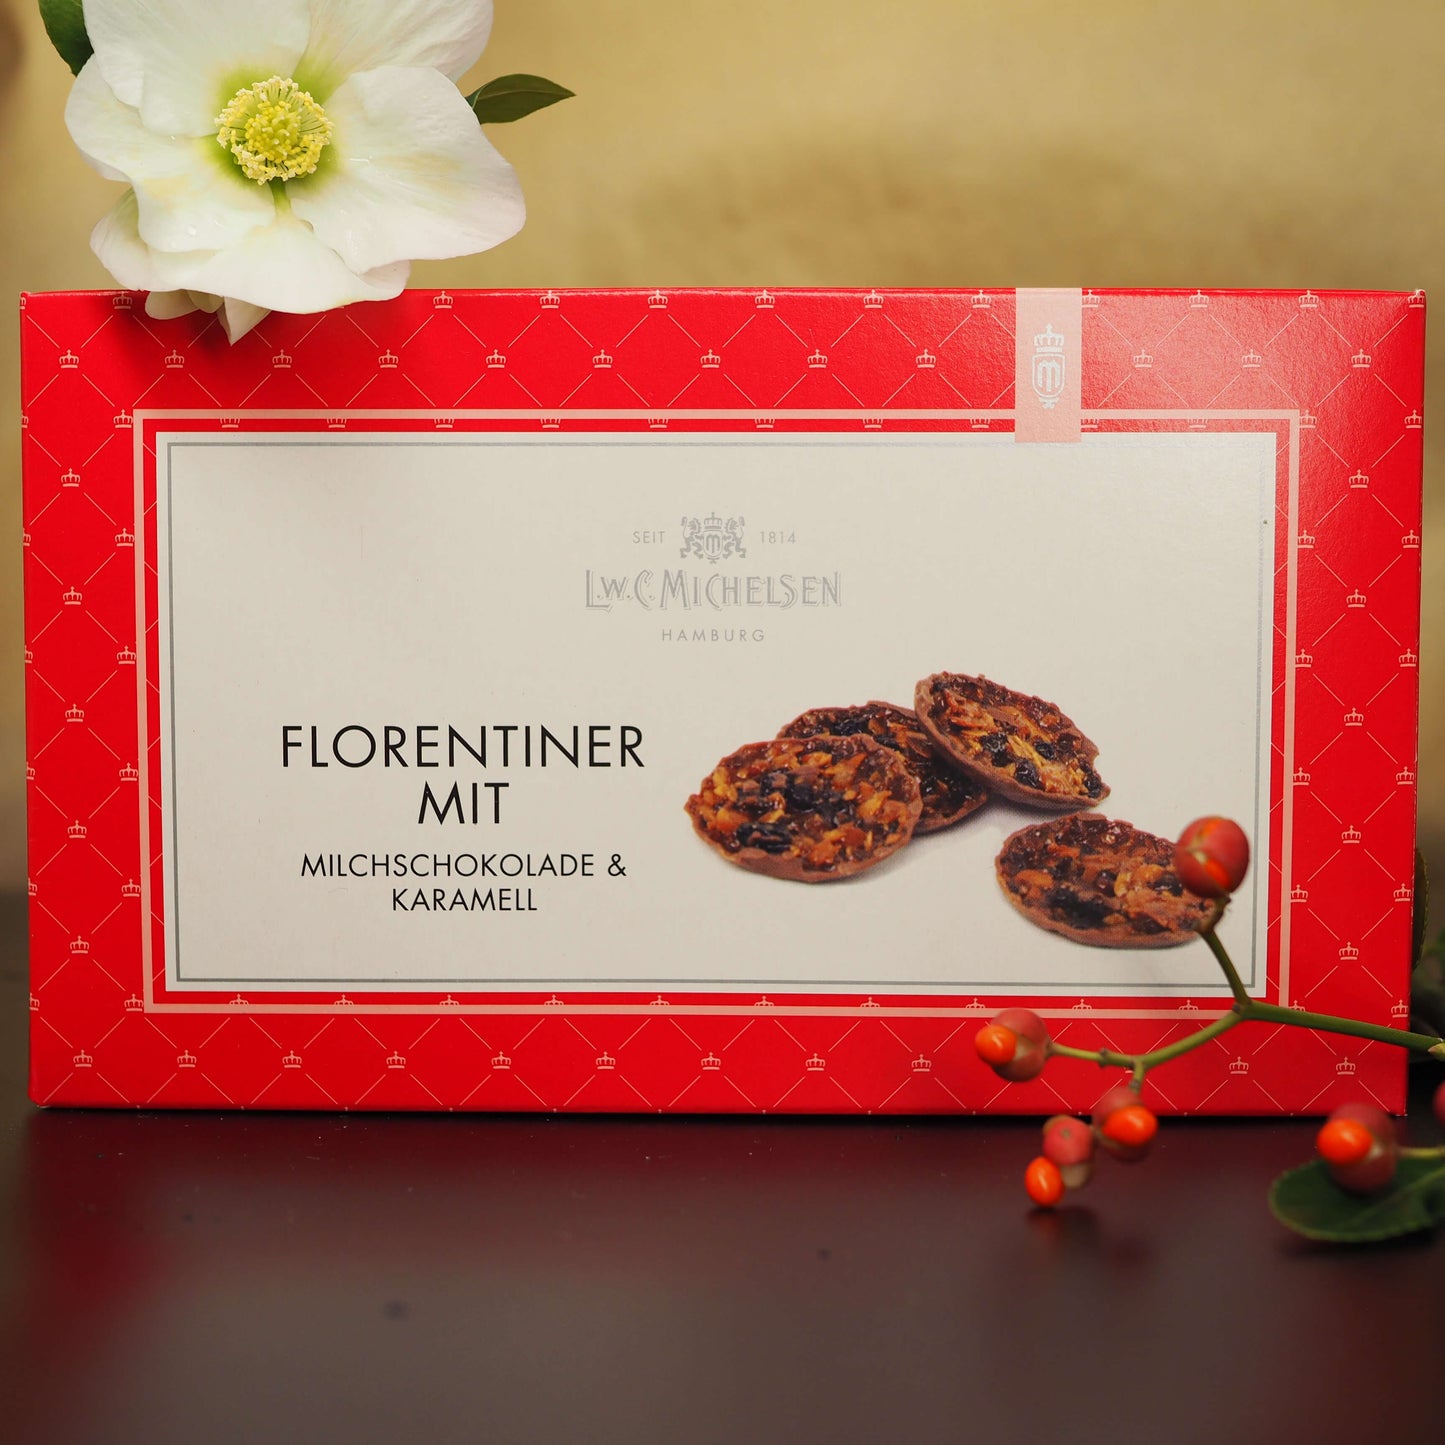 florentiner milchschokolade schoklade karamell michelsen plätzchen gebäck kekse